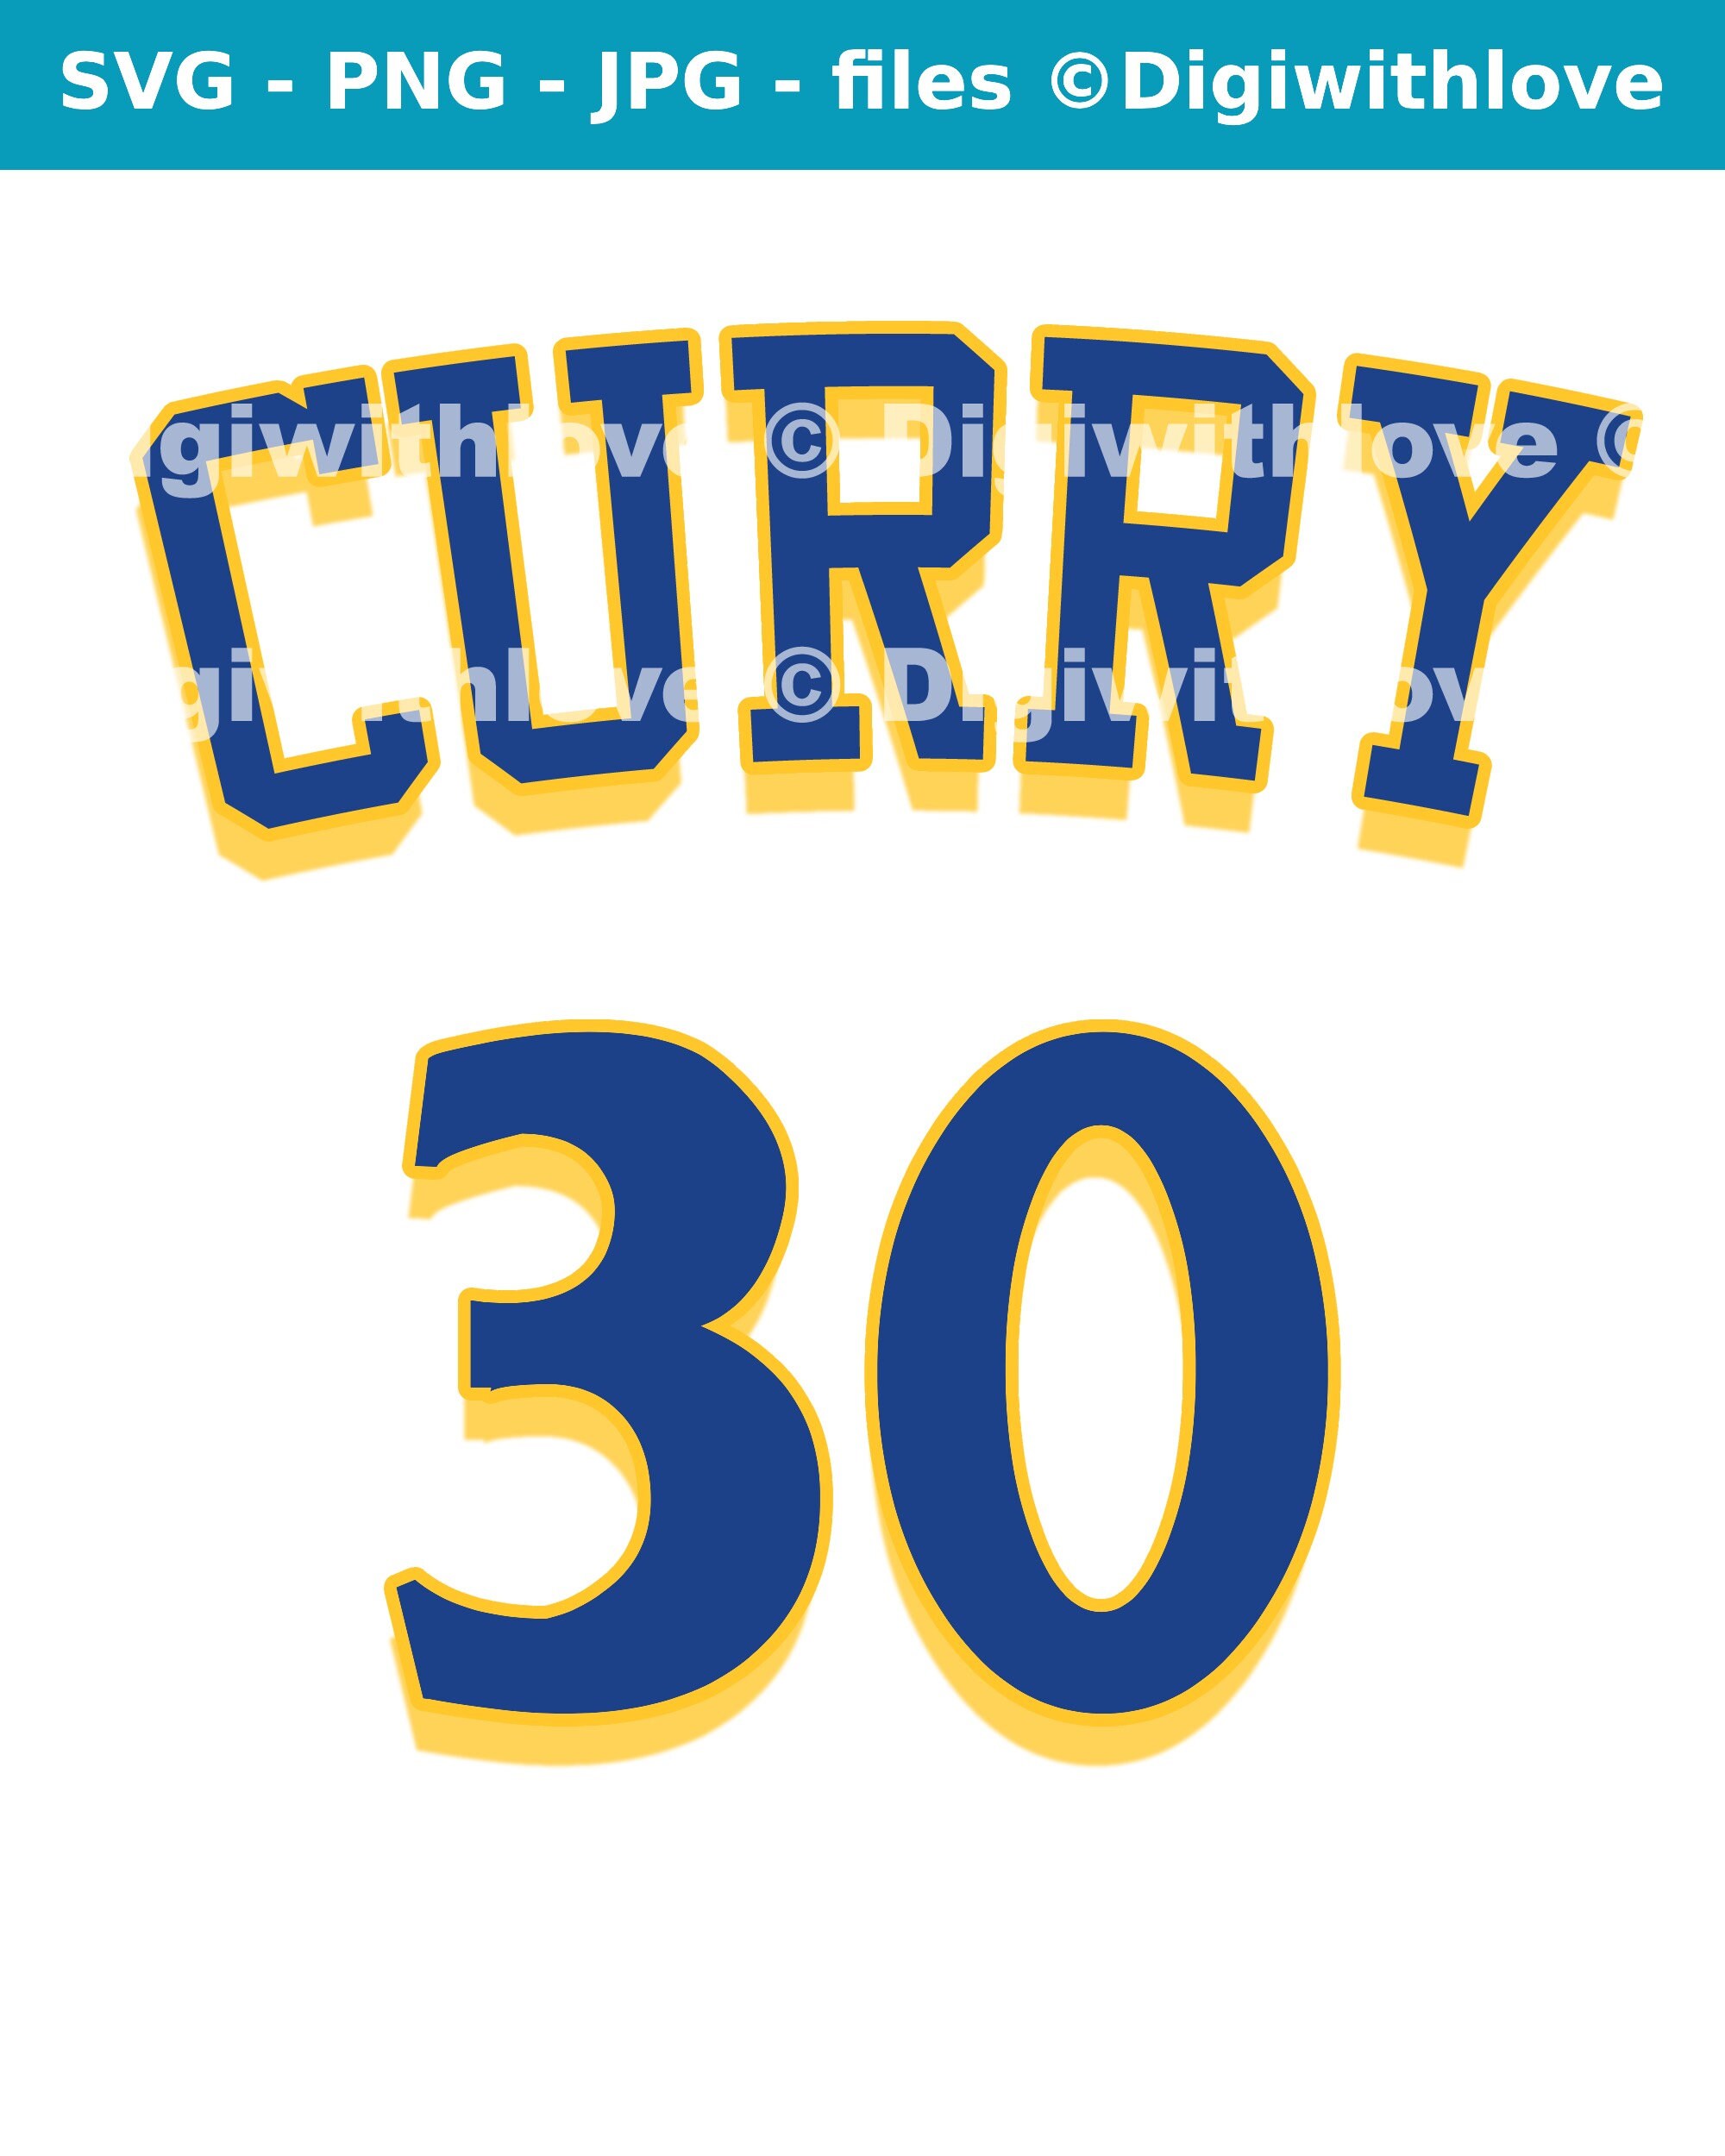 Stephen Curry Golden State Warriors SVG, Curry 30 SVG, Basketball Player SVG